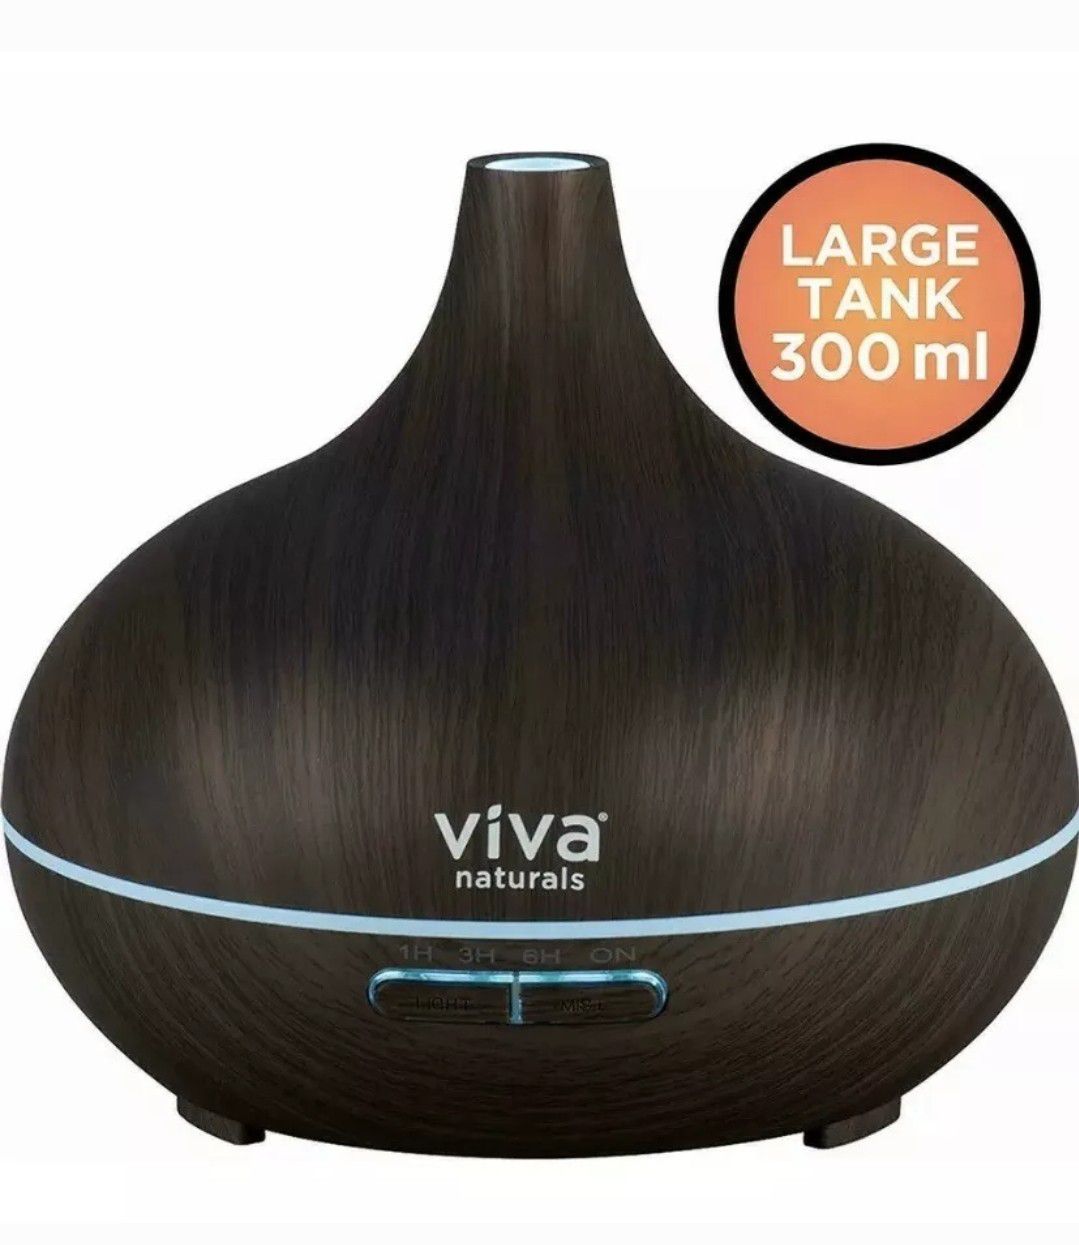 Brand new Viva Naturals Ultrasonic Aromatherapy Essential Oil Diffuser, Large 300ml Tank -